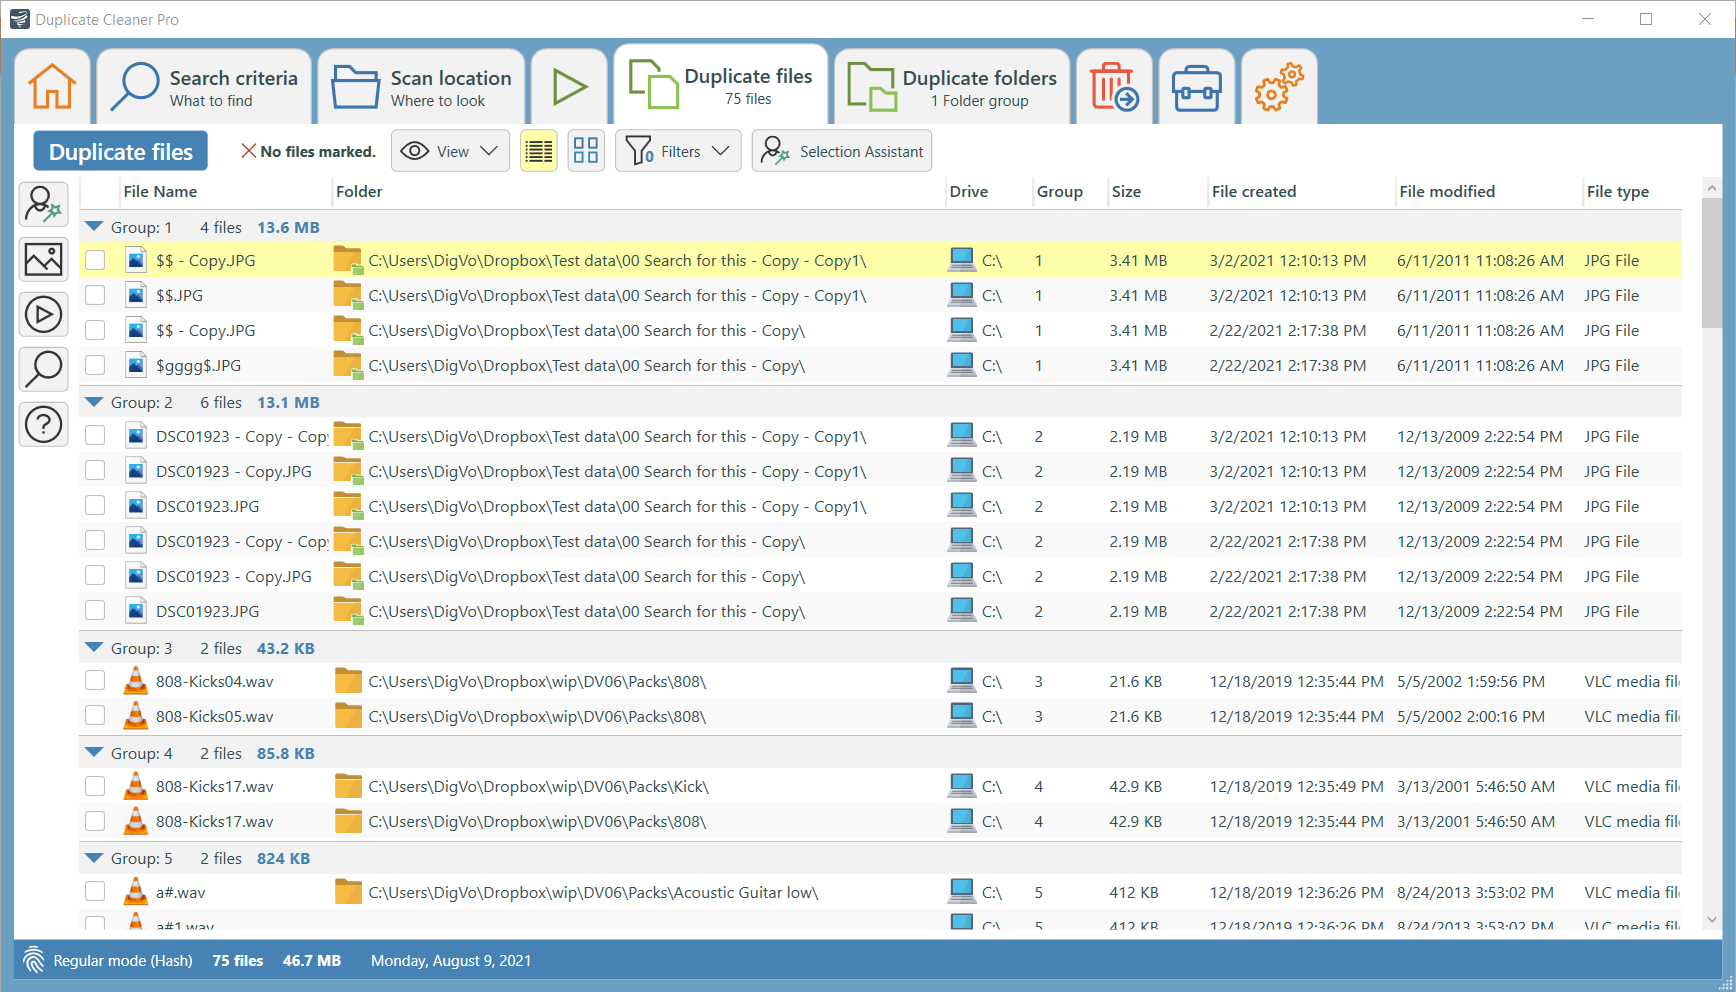 Duplicate Cleaner Pro Screenshot